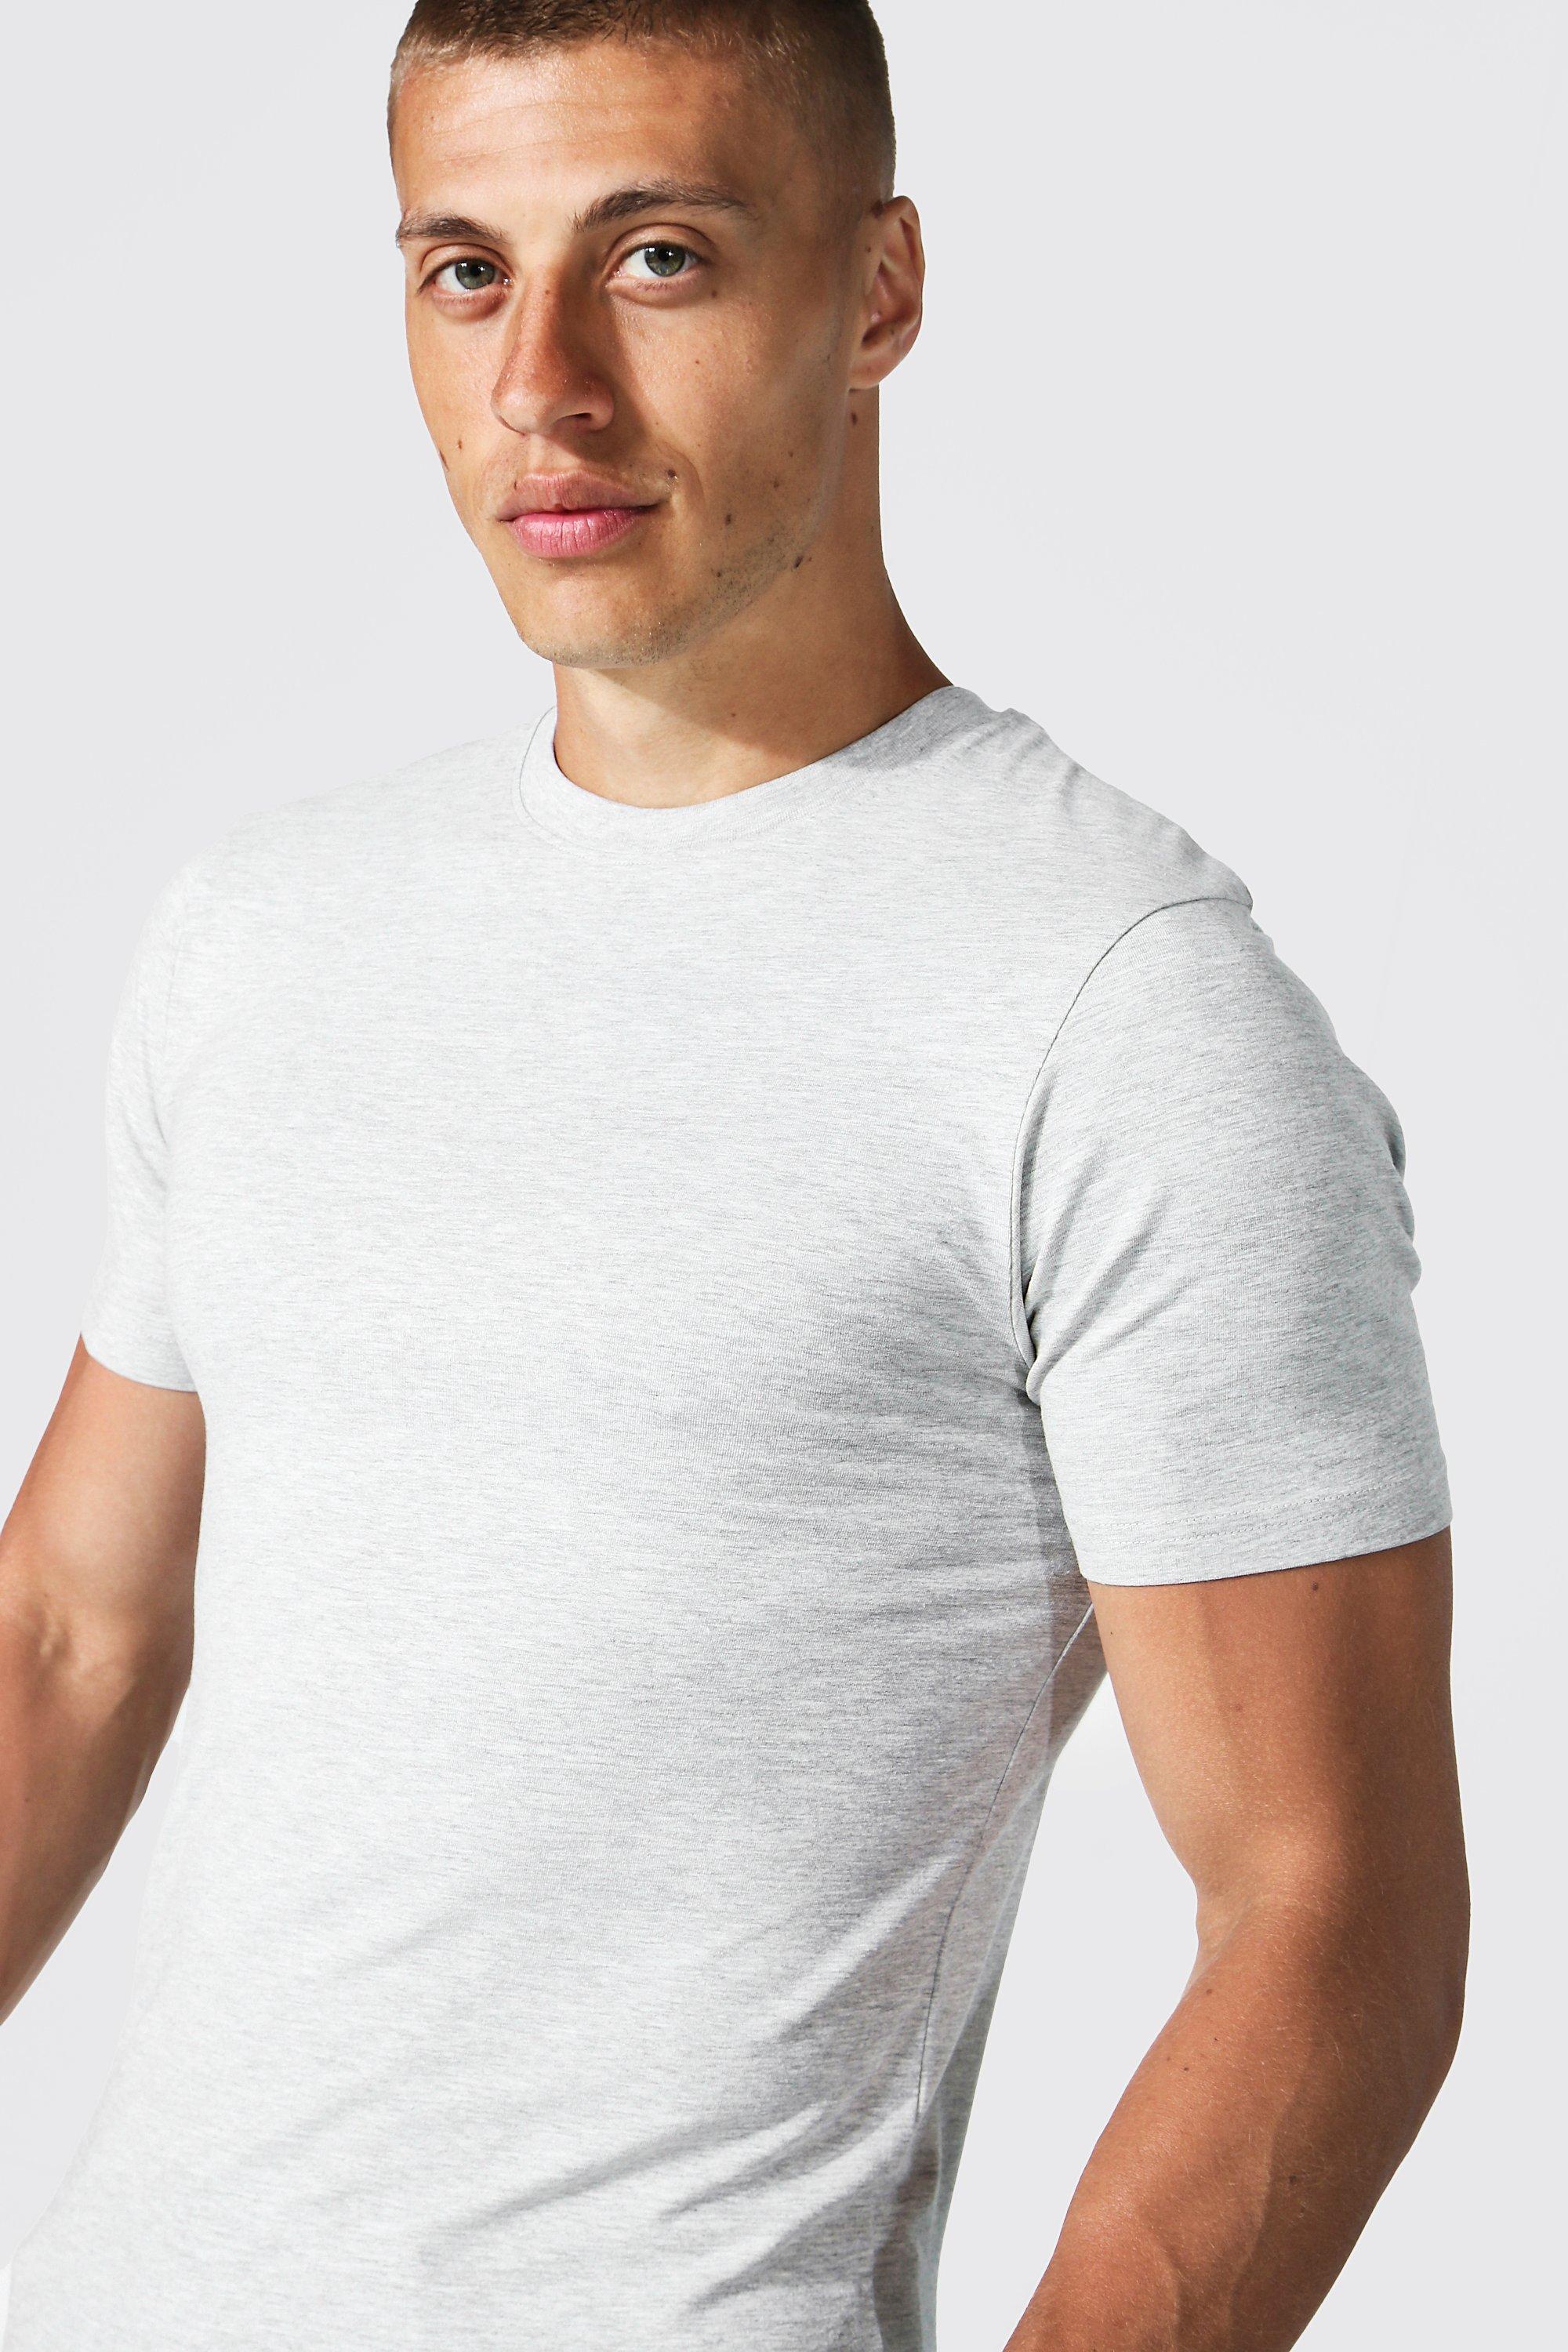 Camiseta básica ajustada al músculo